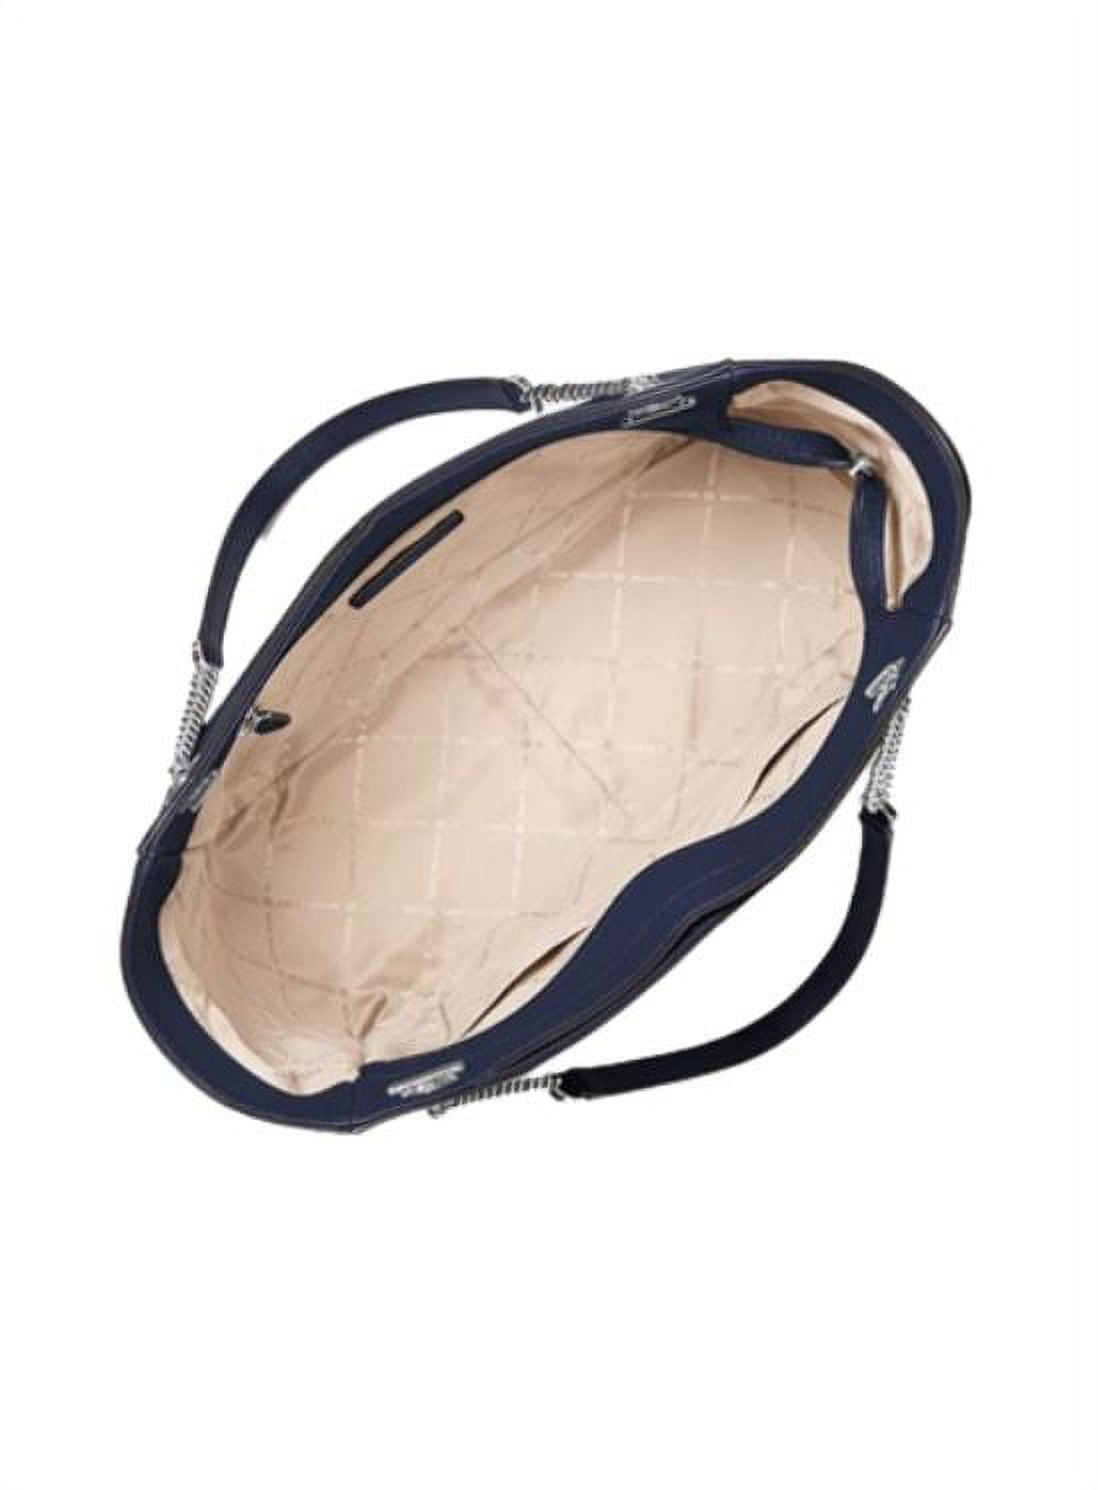 Michael Kors womens Jet Set Large Saffiano Leather Shoulder Bag, Navy Blue,  NWT